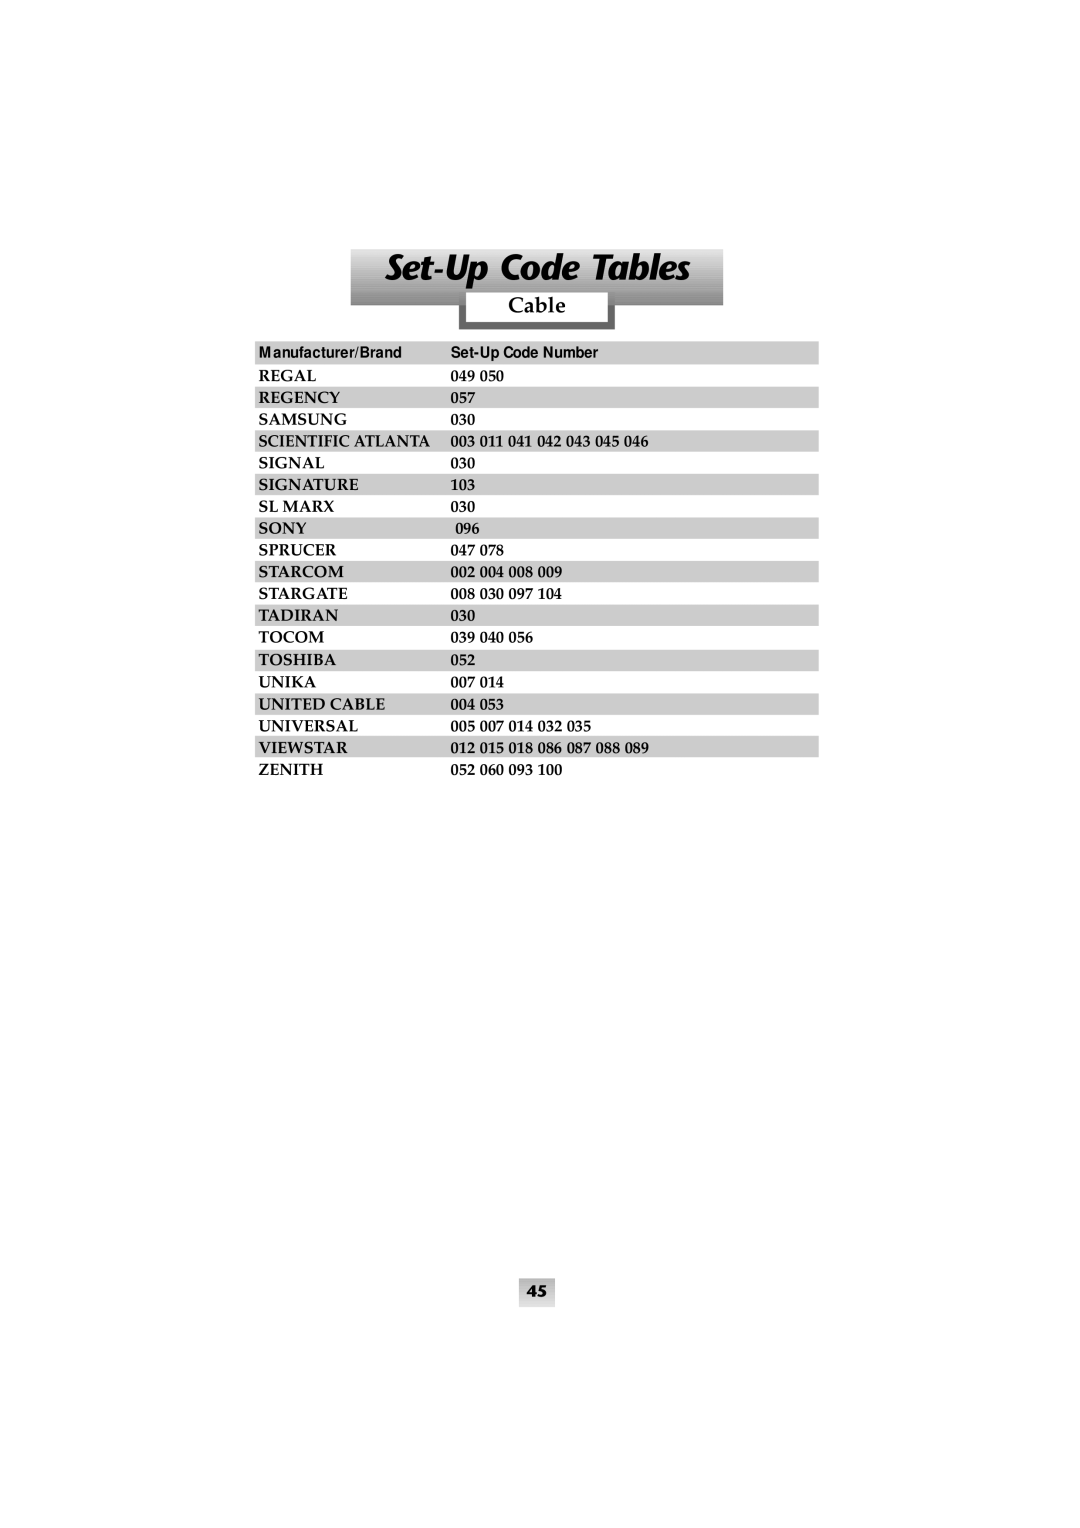 Universal Remote Control SL-8000 manual Cable, Set-Up Code Tables, Manufacturer/Brand, Set-Up Code Number 